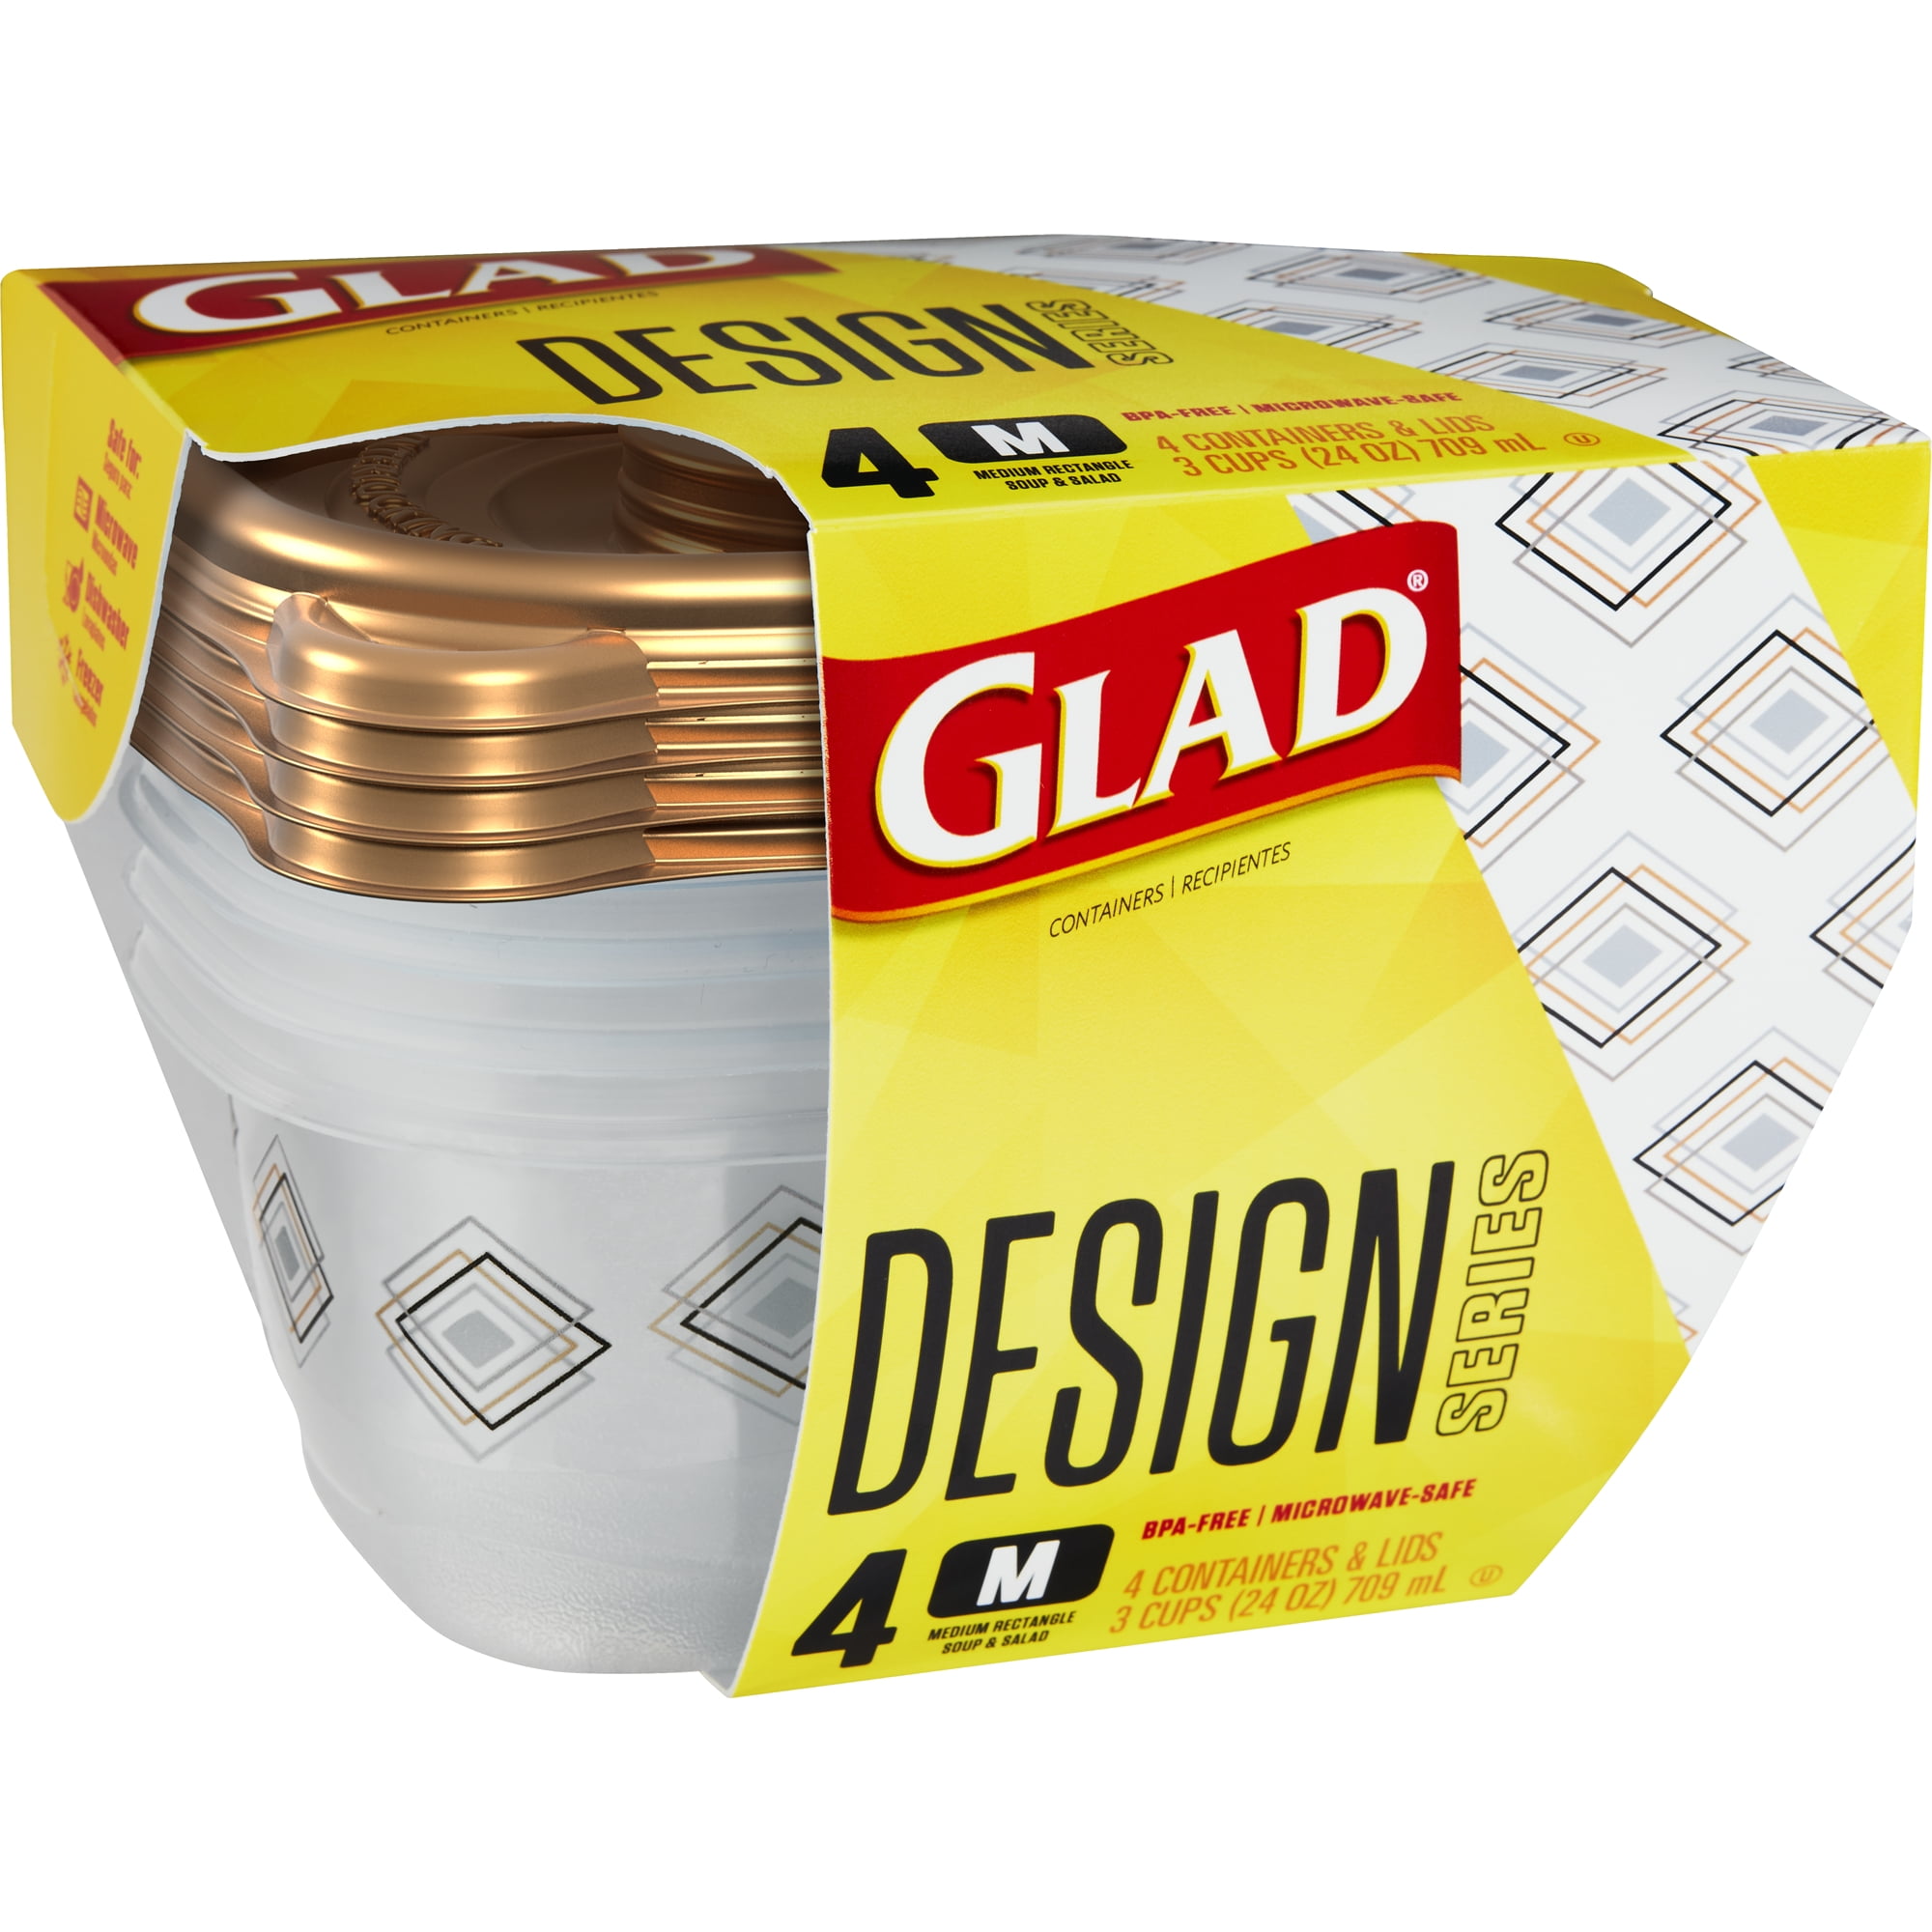 Glad Designer Series Containers & Lids, Medium Rectangle, 3 Cups, Plastic  Containers